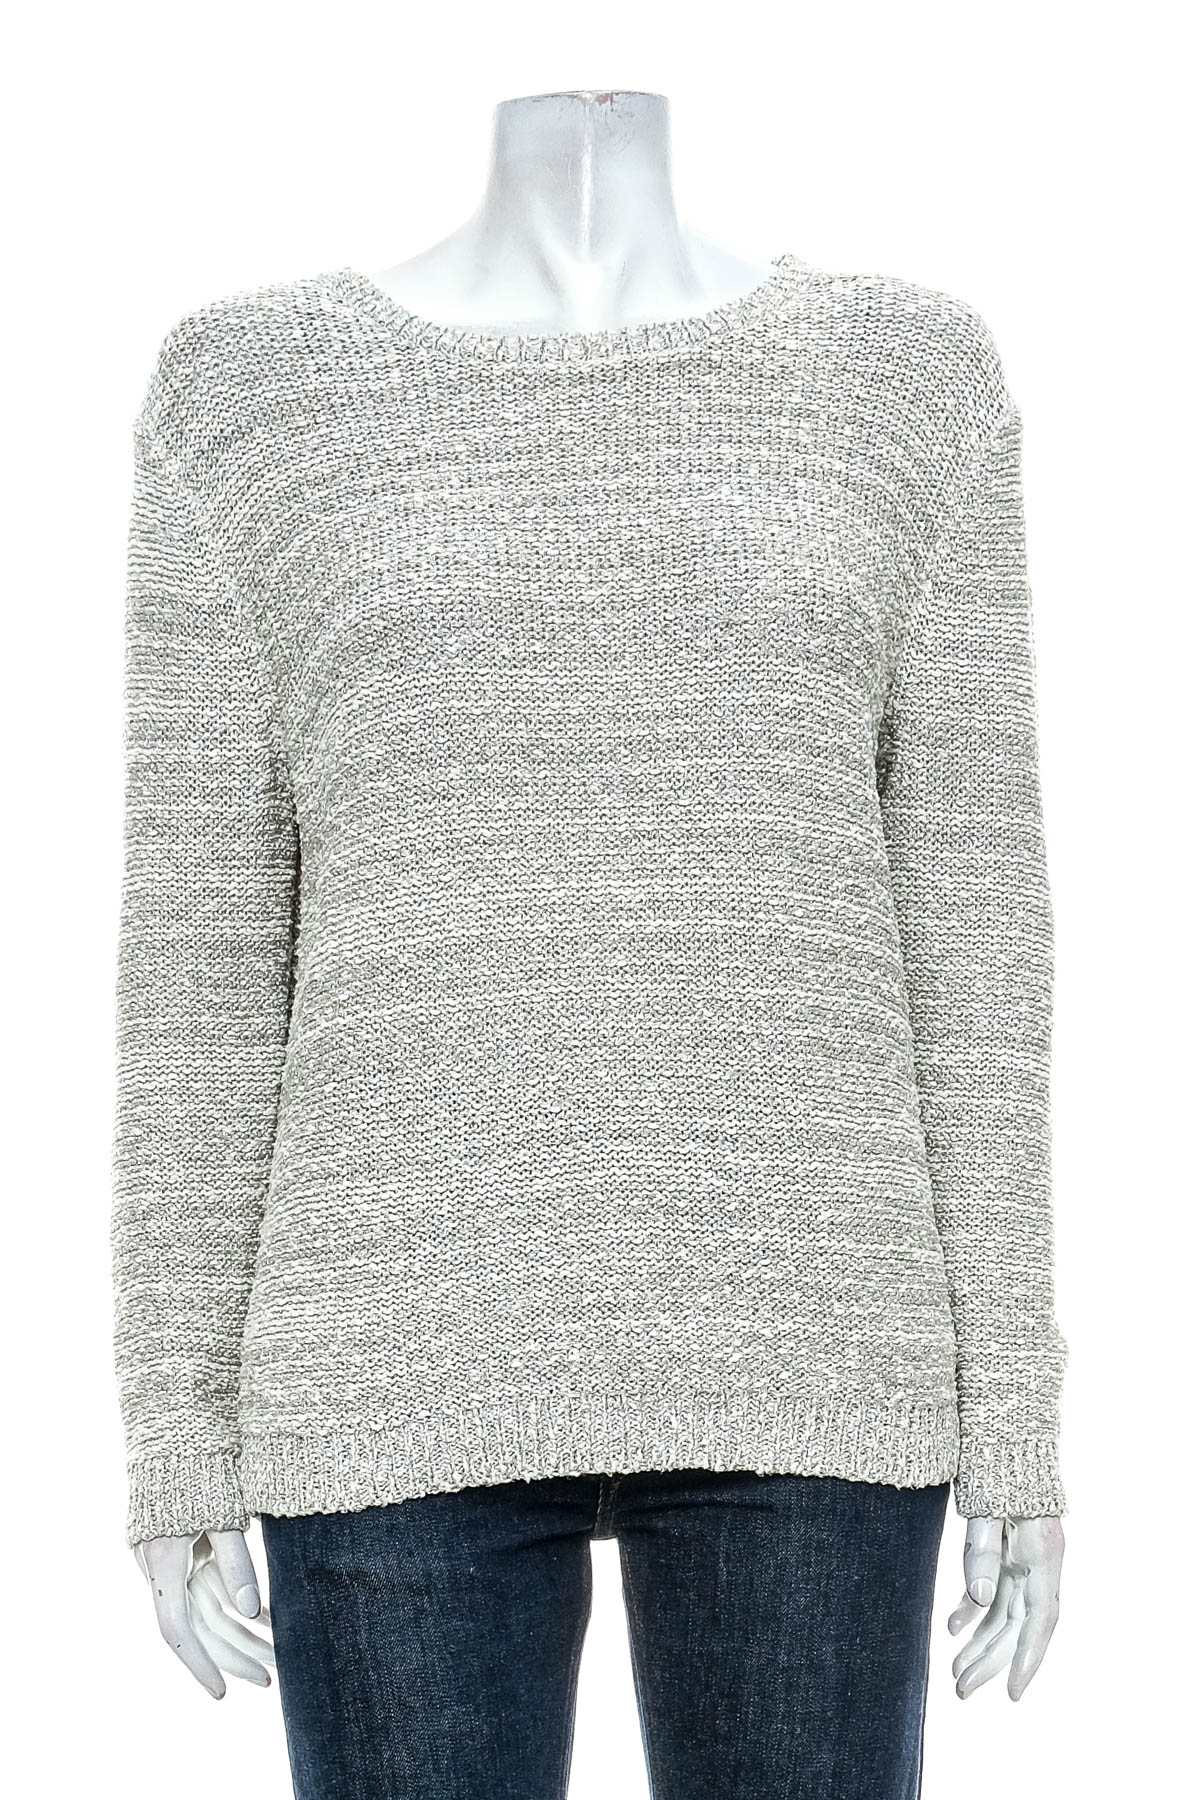 Дамски пуловер - M&S Woman - 0